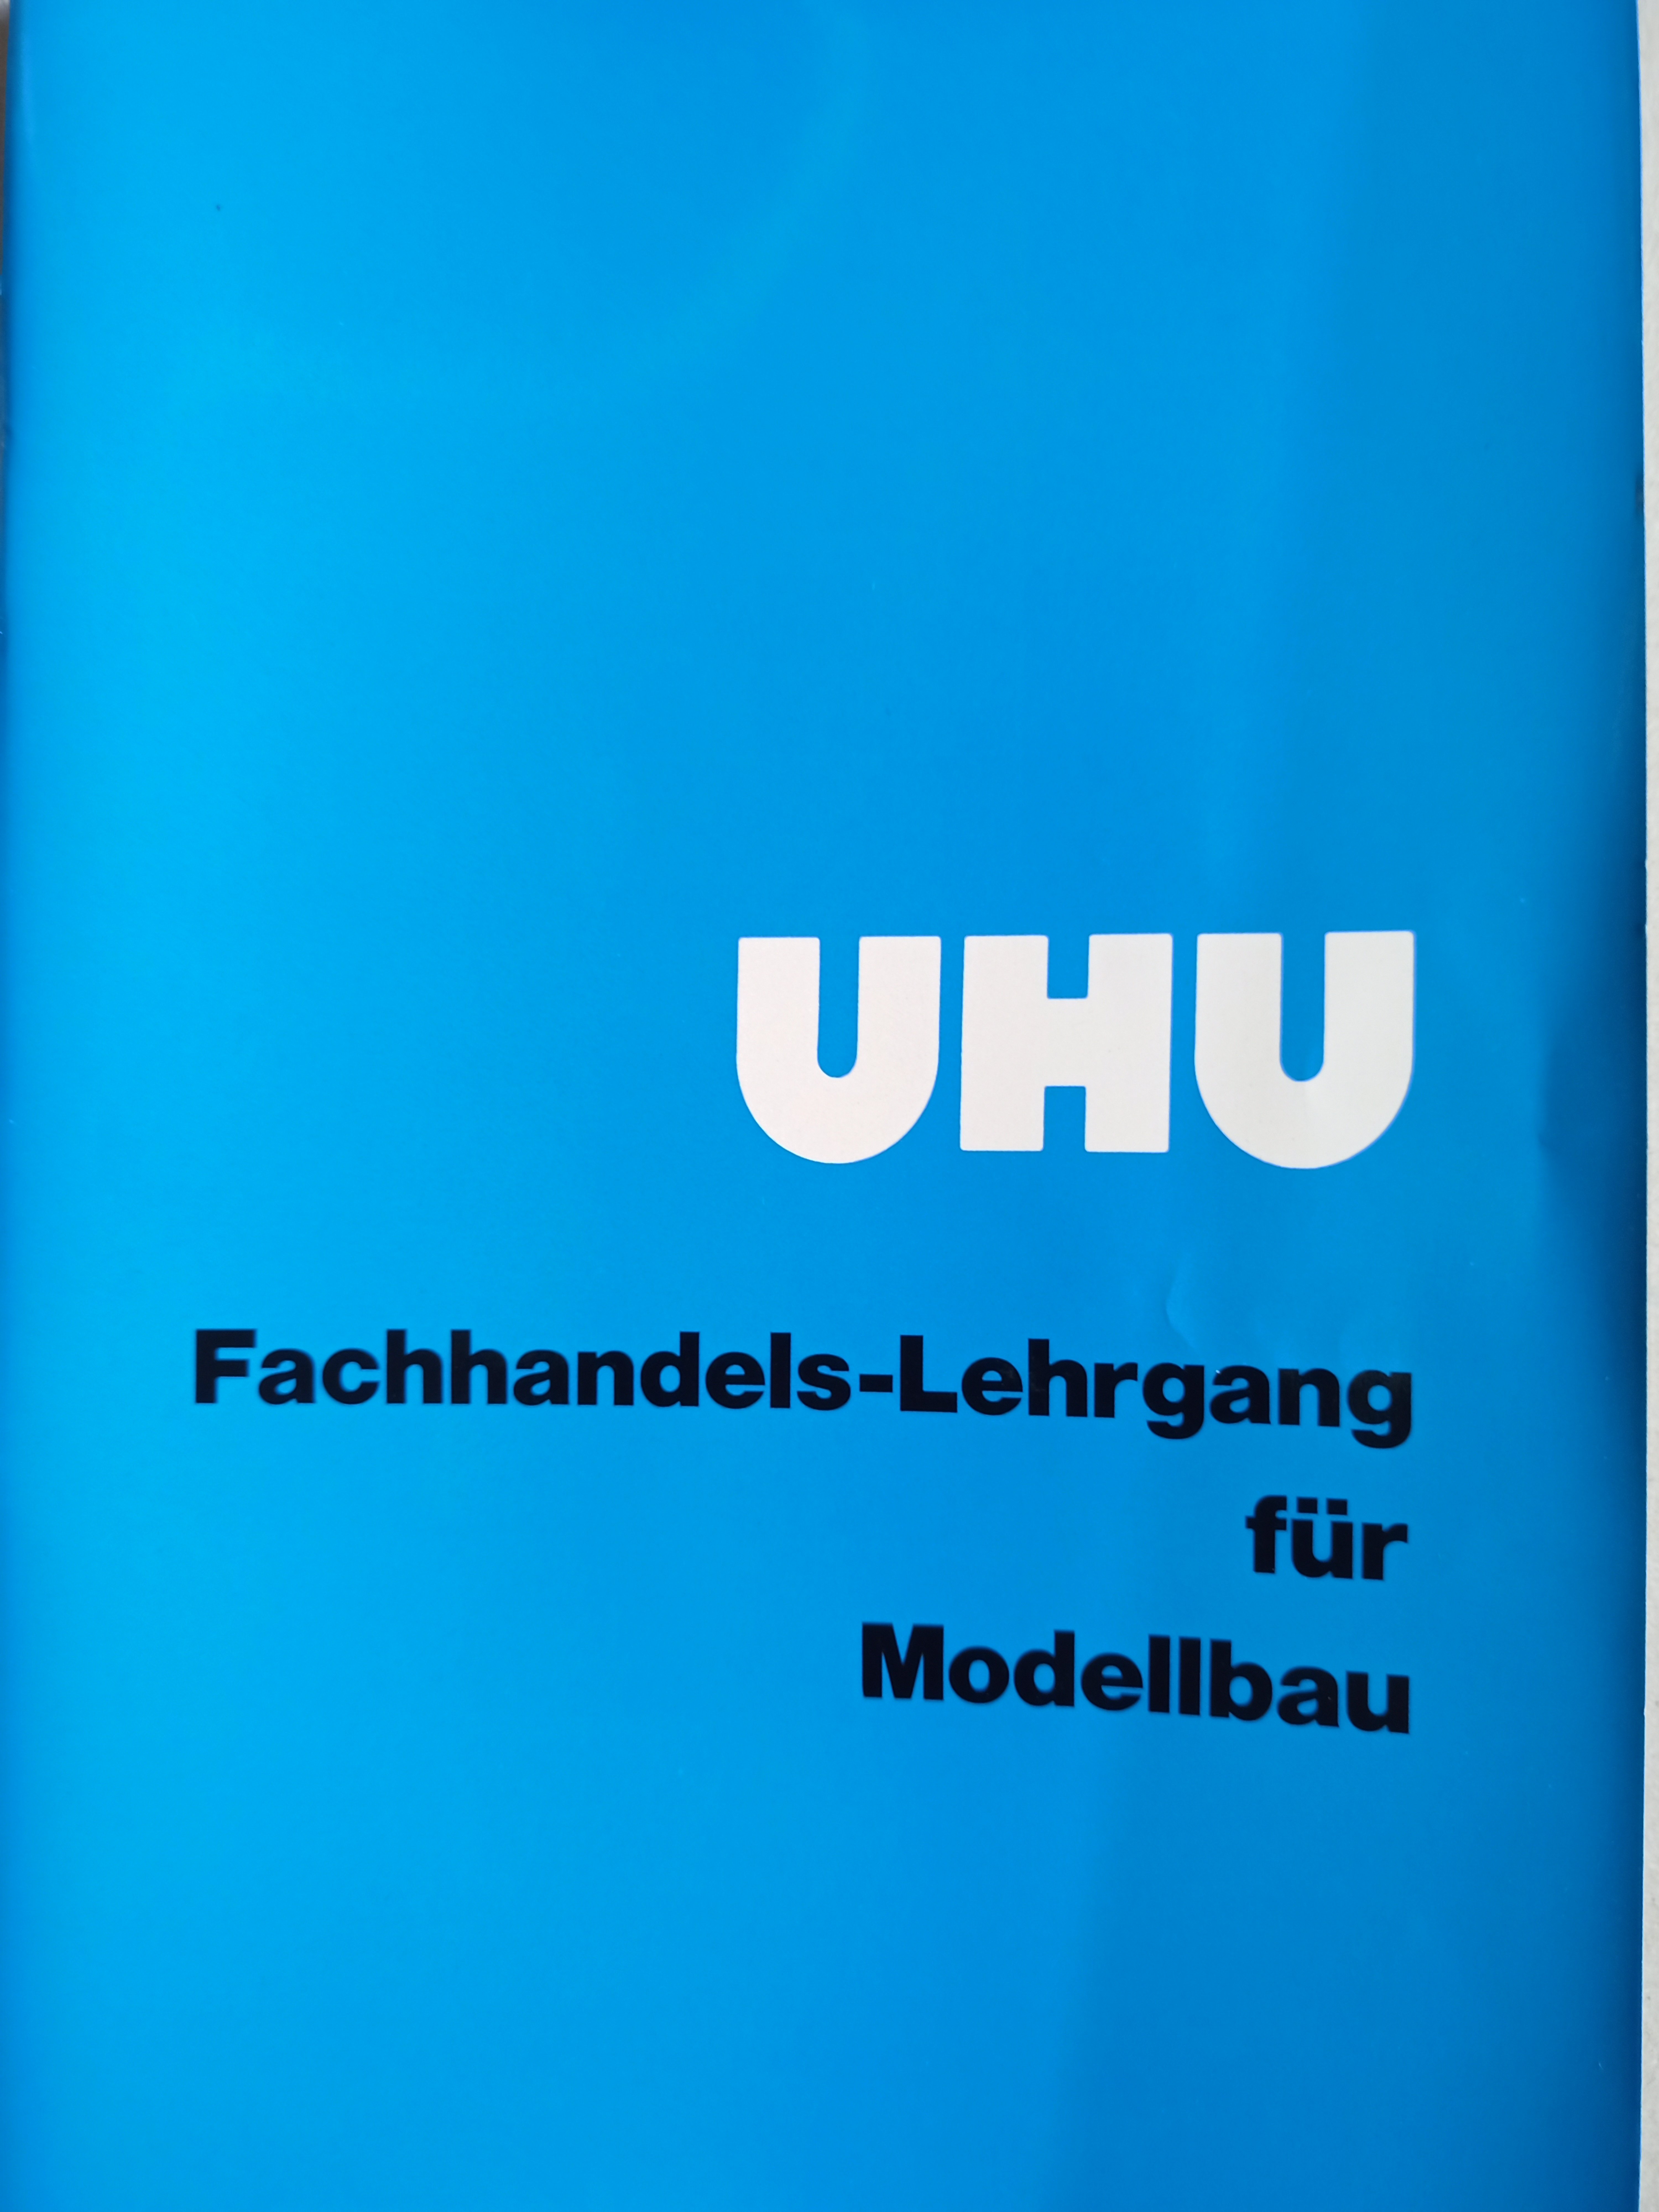 UHU Fachhandelslehrgang (Deutsches Segelflugmuseum mit Modellflug CC BY-NC-SA)